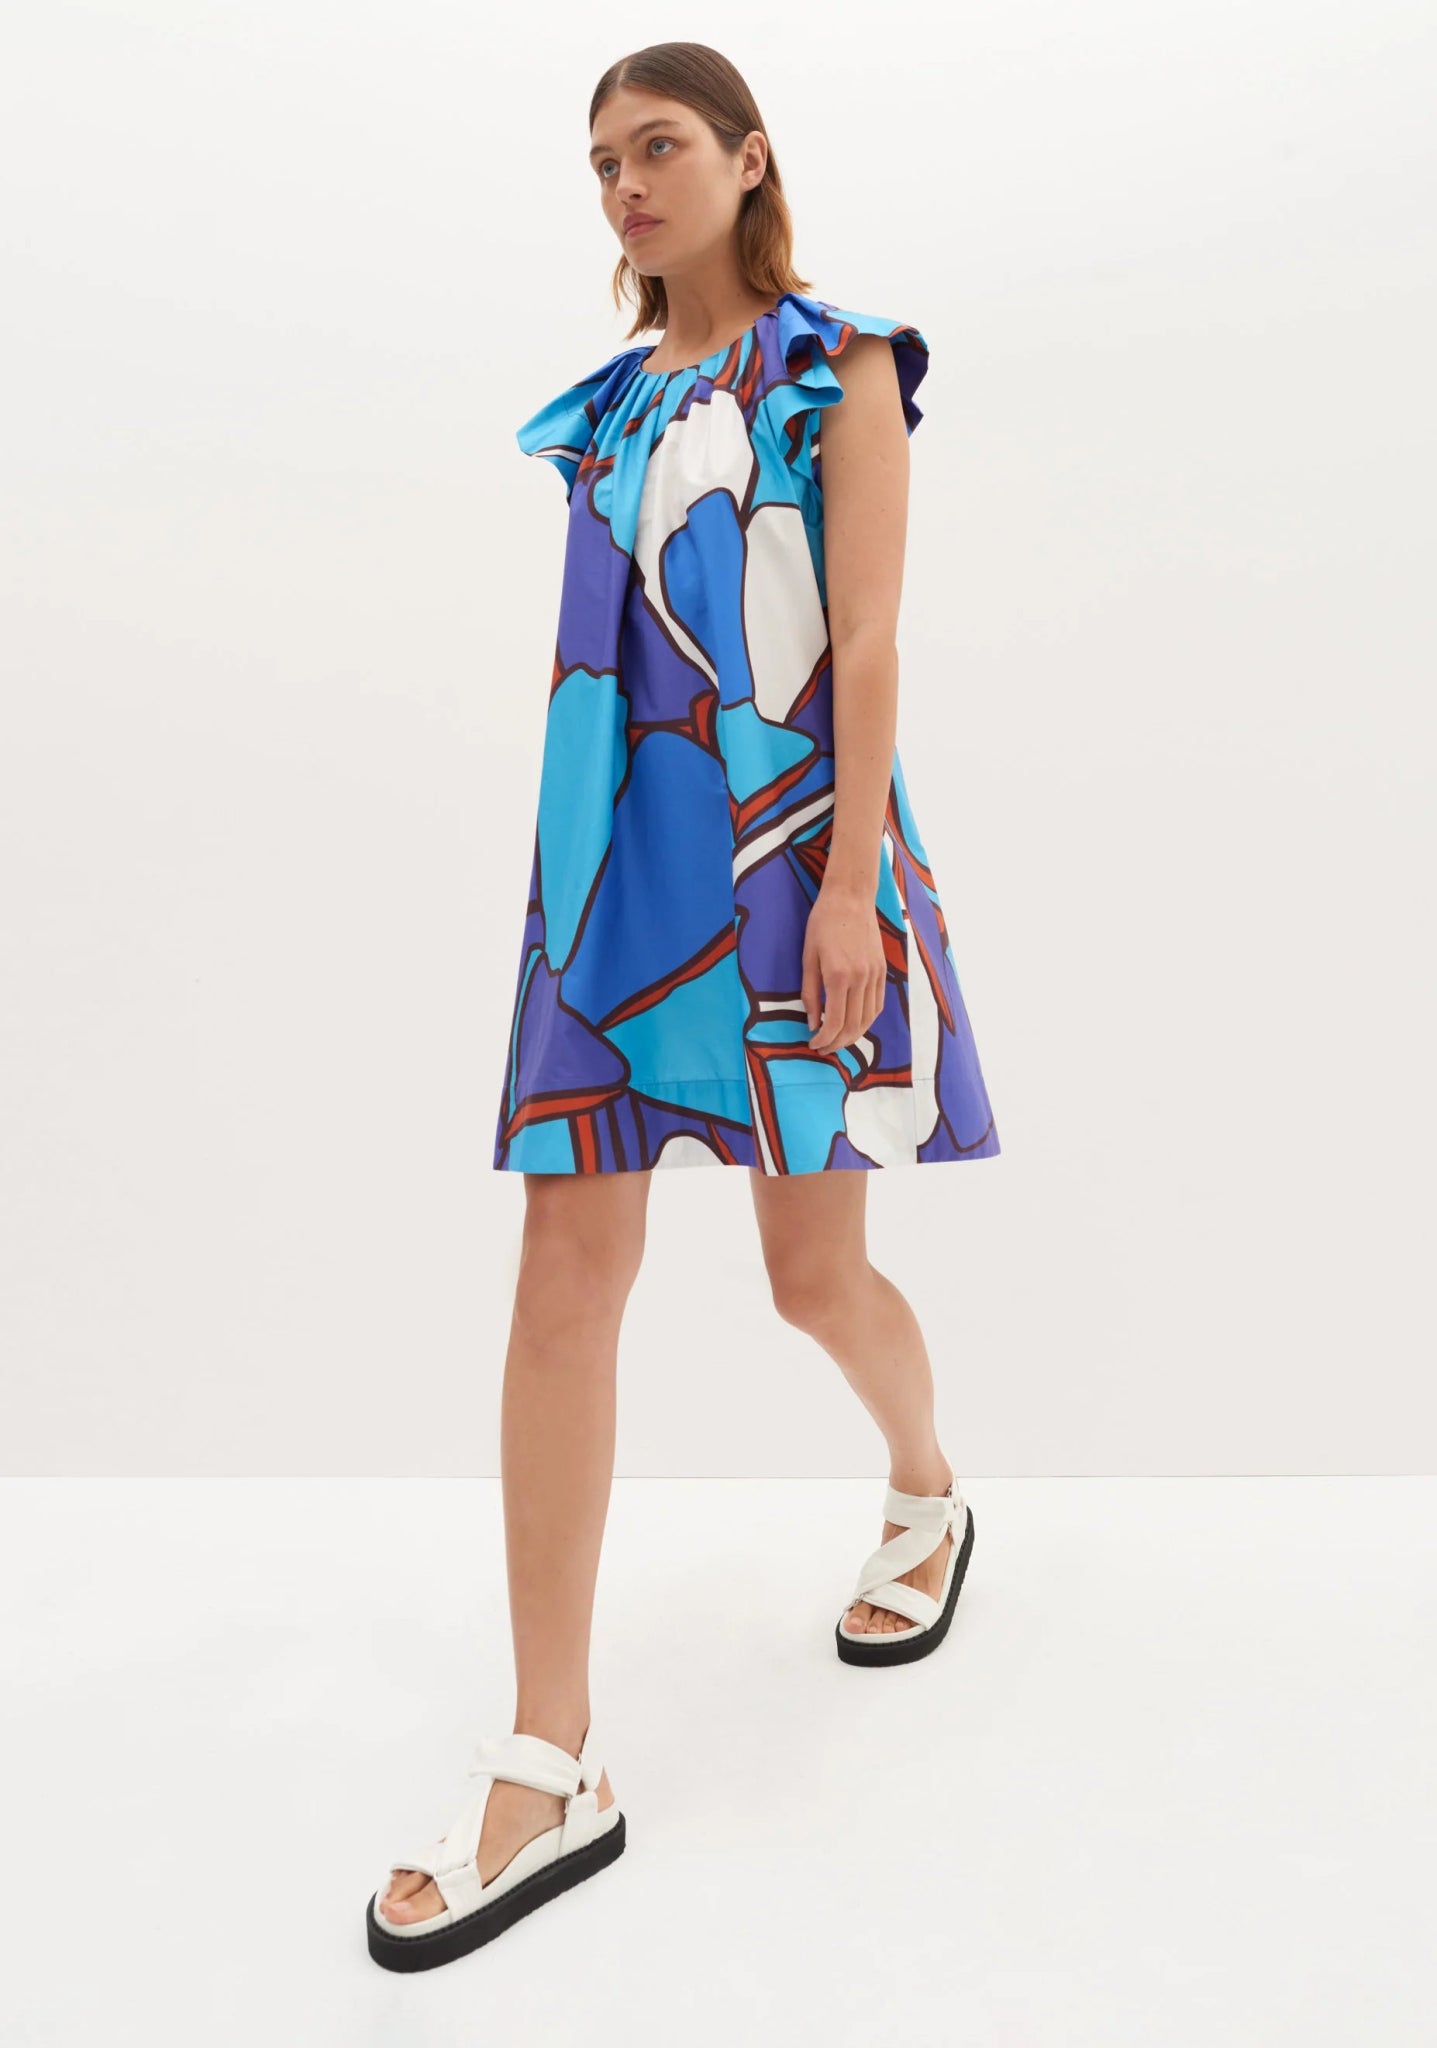 Morrison Ellidy Dresses - Pinkhill, Darwin boutique, Australian high end fashion, Darwin Fashion